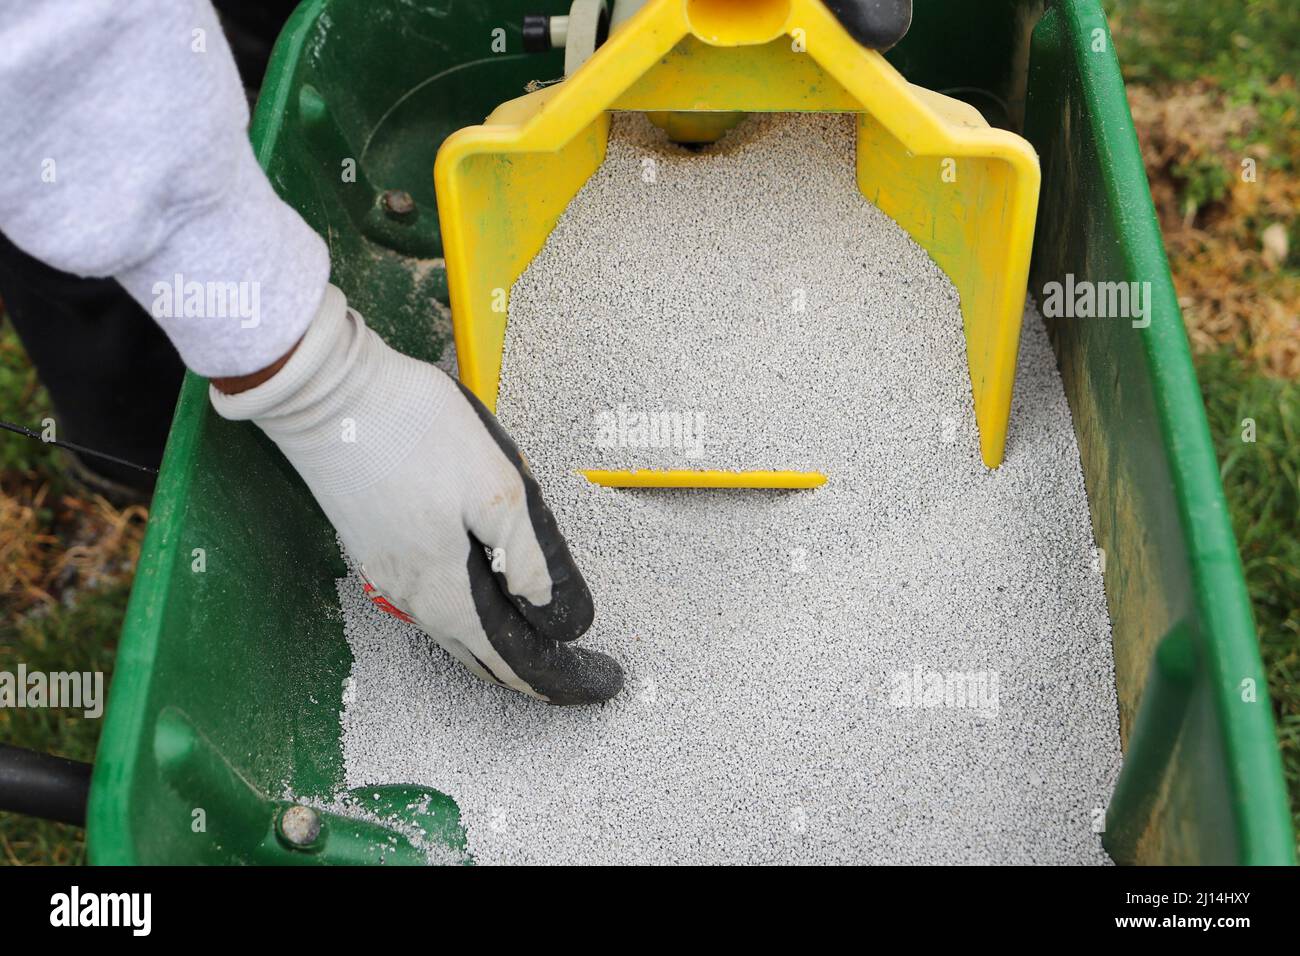 A man pouring lawn fertilizer in a barrel Stock Photo